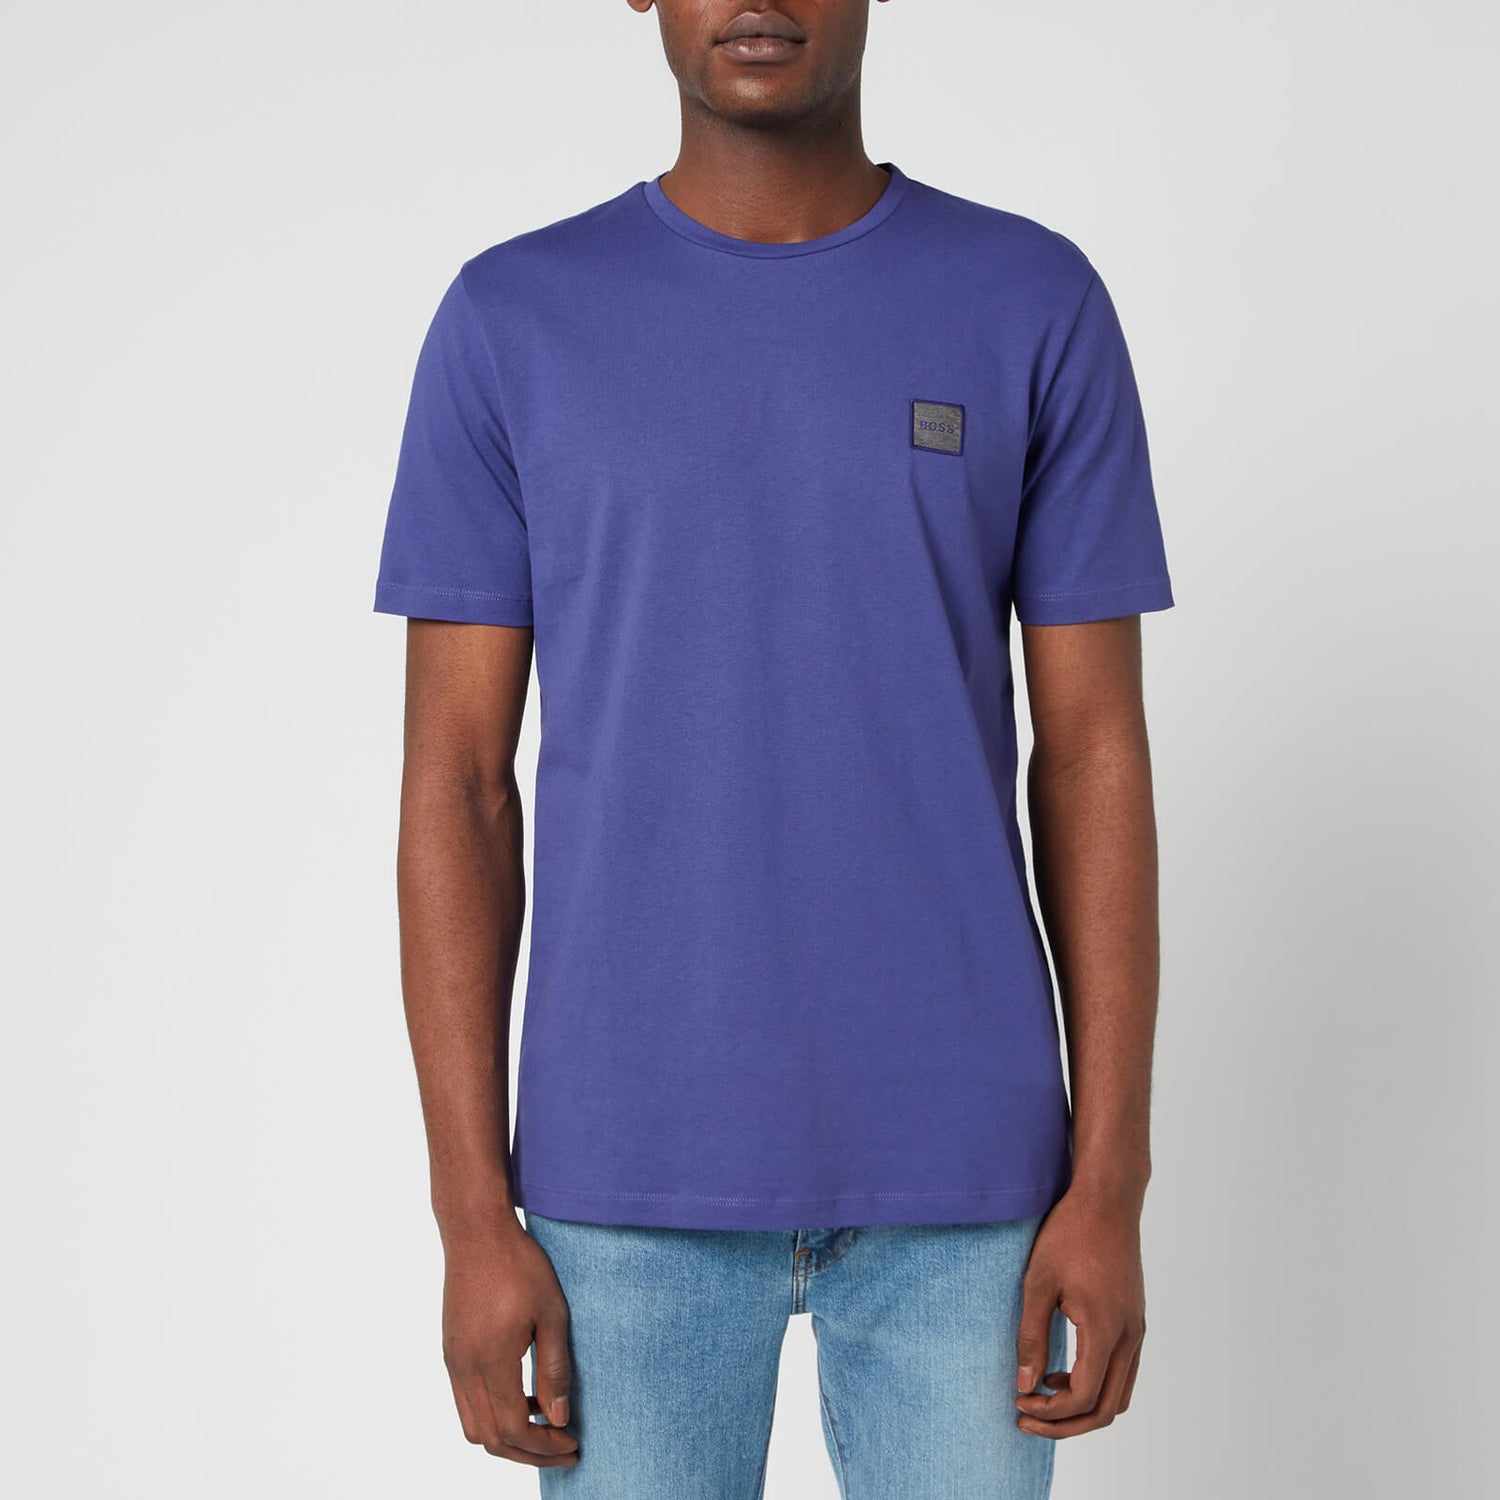 BOSS Orange Men's Tales 1 Crewneck T-Shirt - Medium Purple